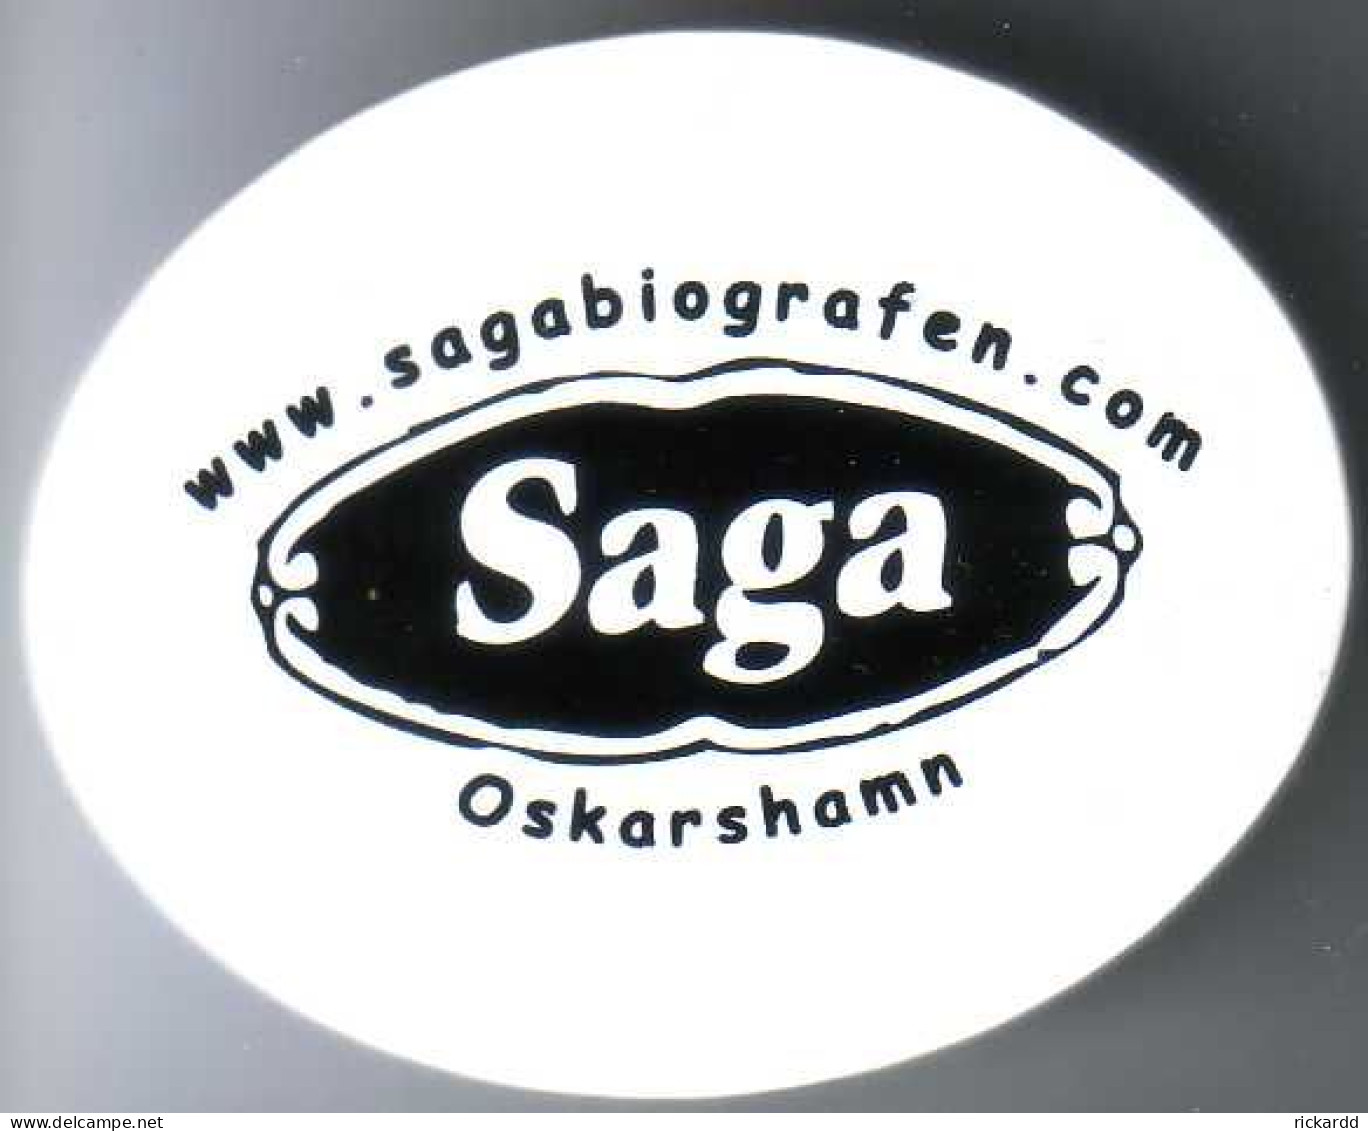 Kitchenmagnet - Saga Oskarshamn - Magnetos